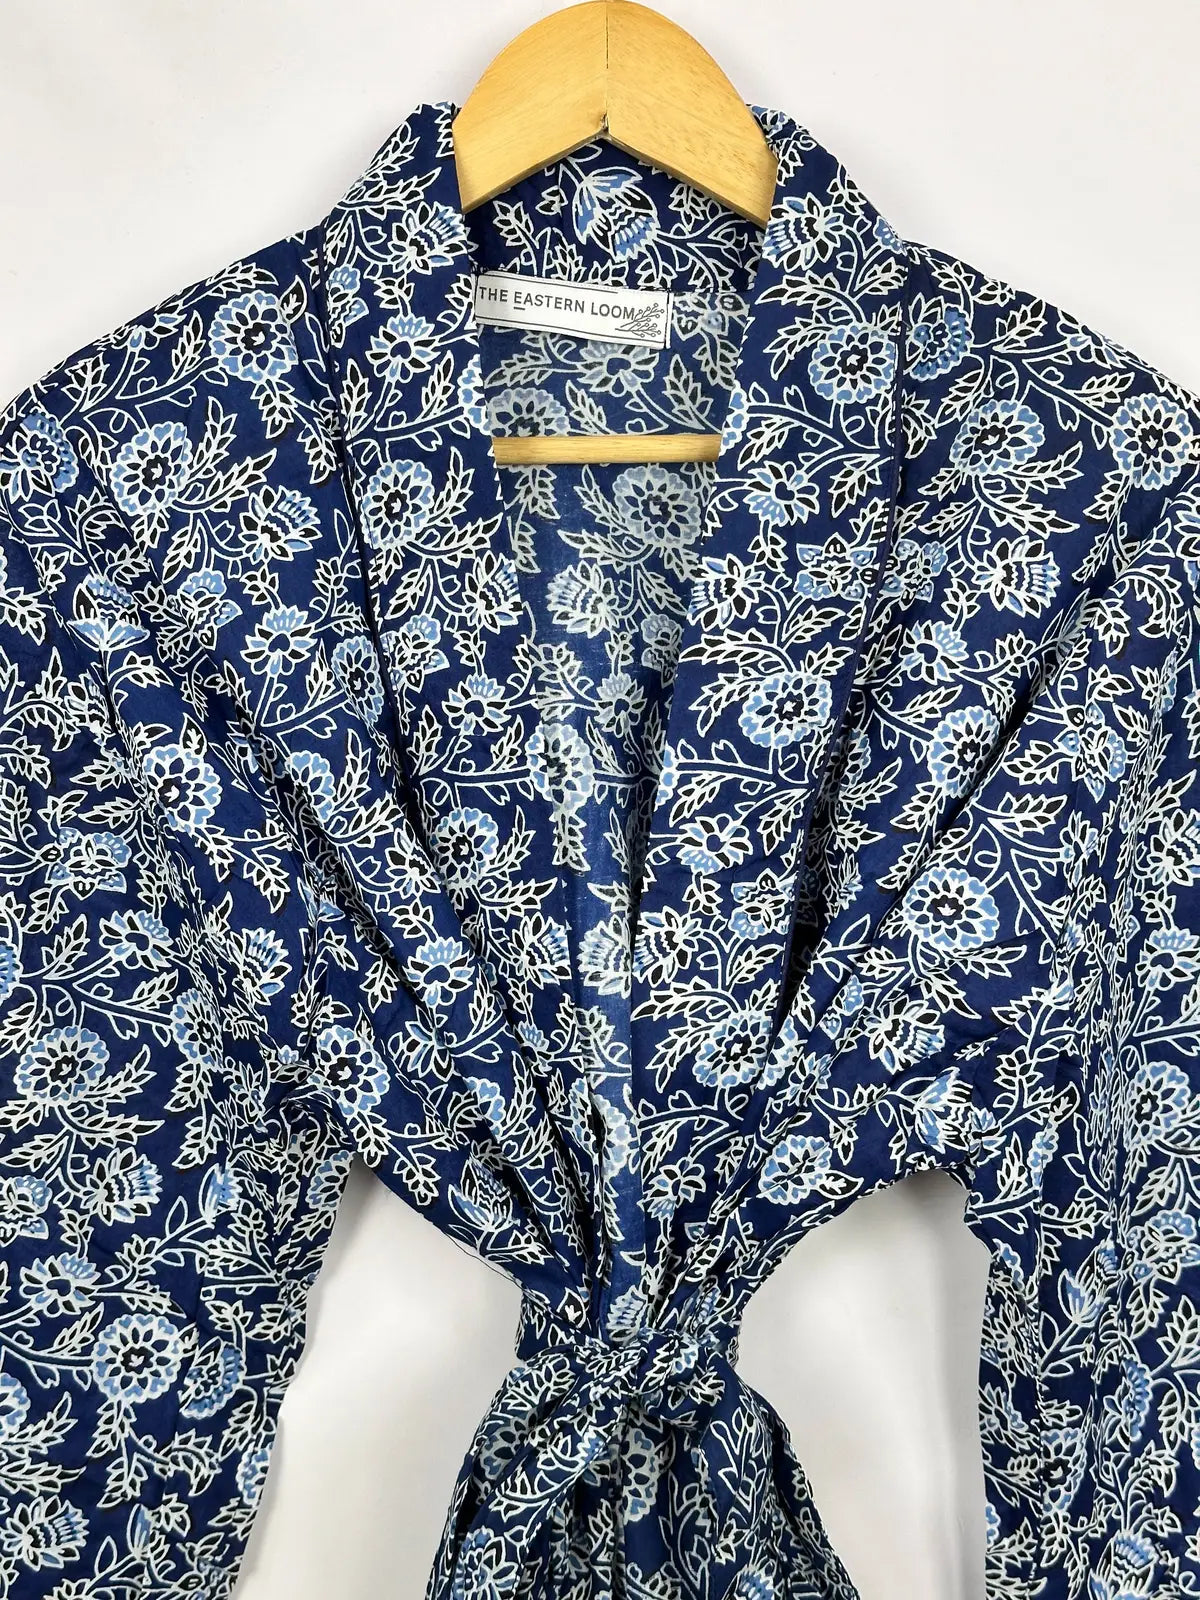 Men’s Cotton Handprinted House Robe Kimono Indigo Botanical Bloom